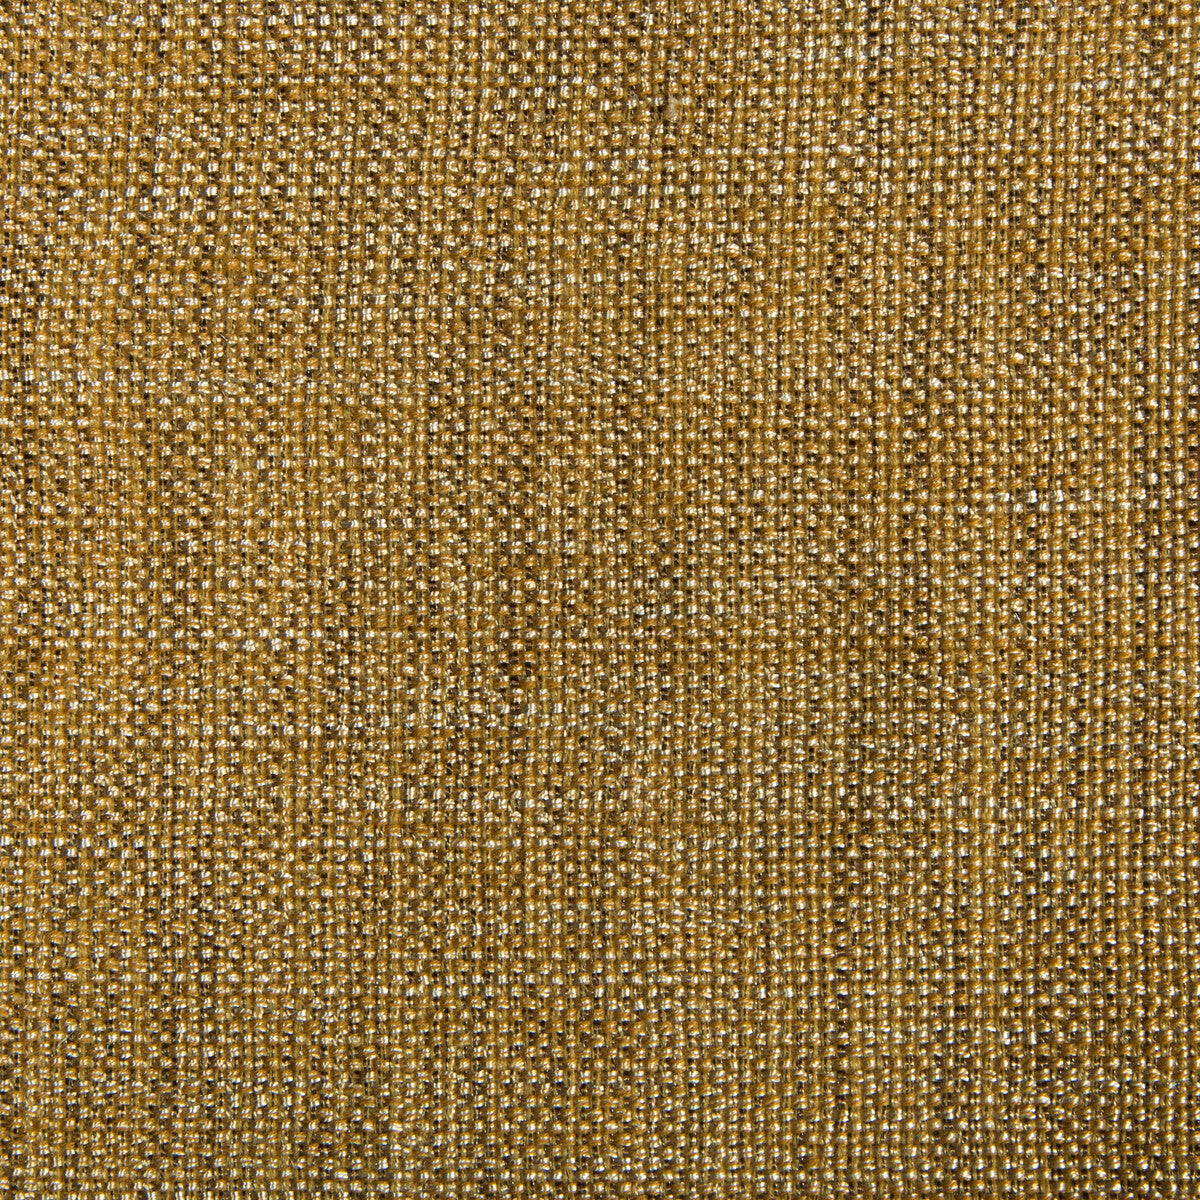 Kravet Smart fabric in 34939-404 color - pattern 34939.404.0 - by Kravet Smart